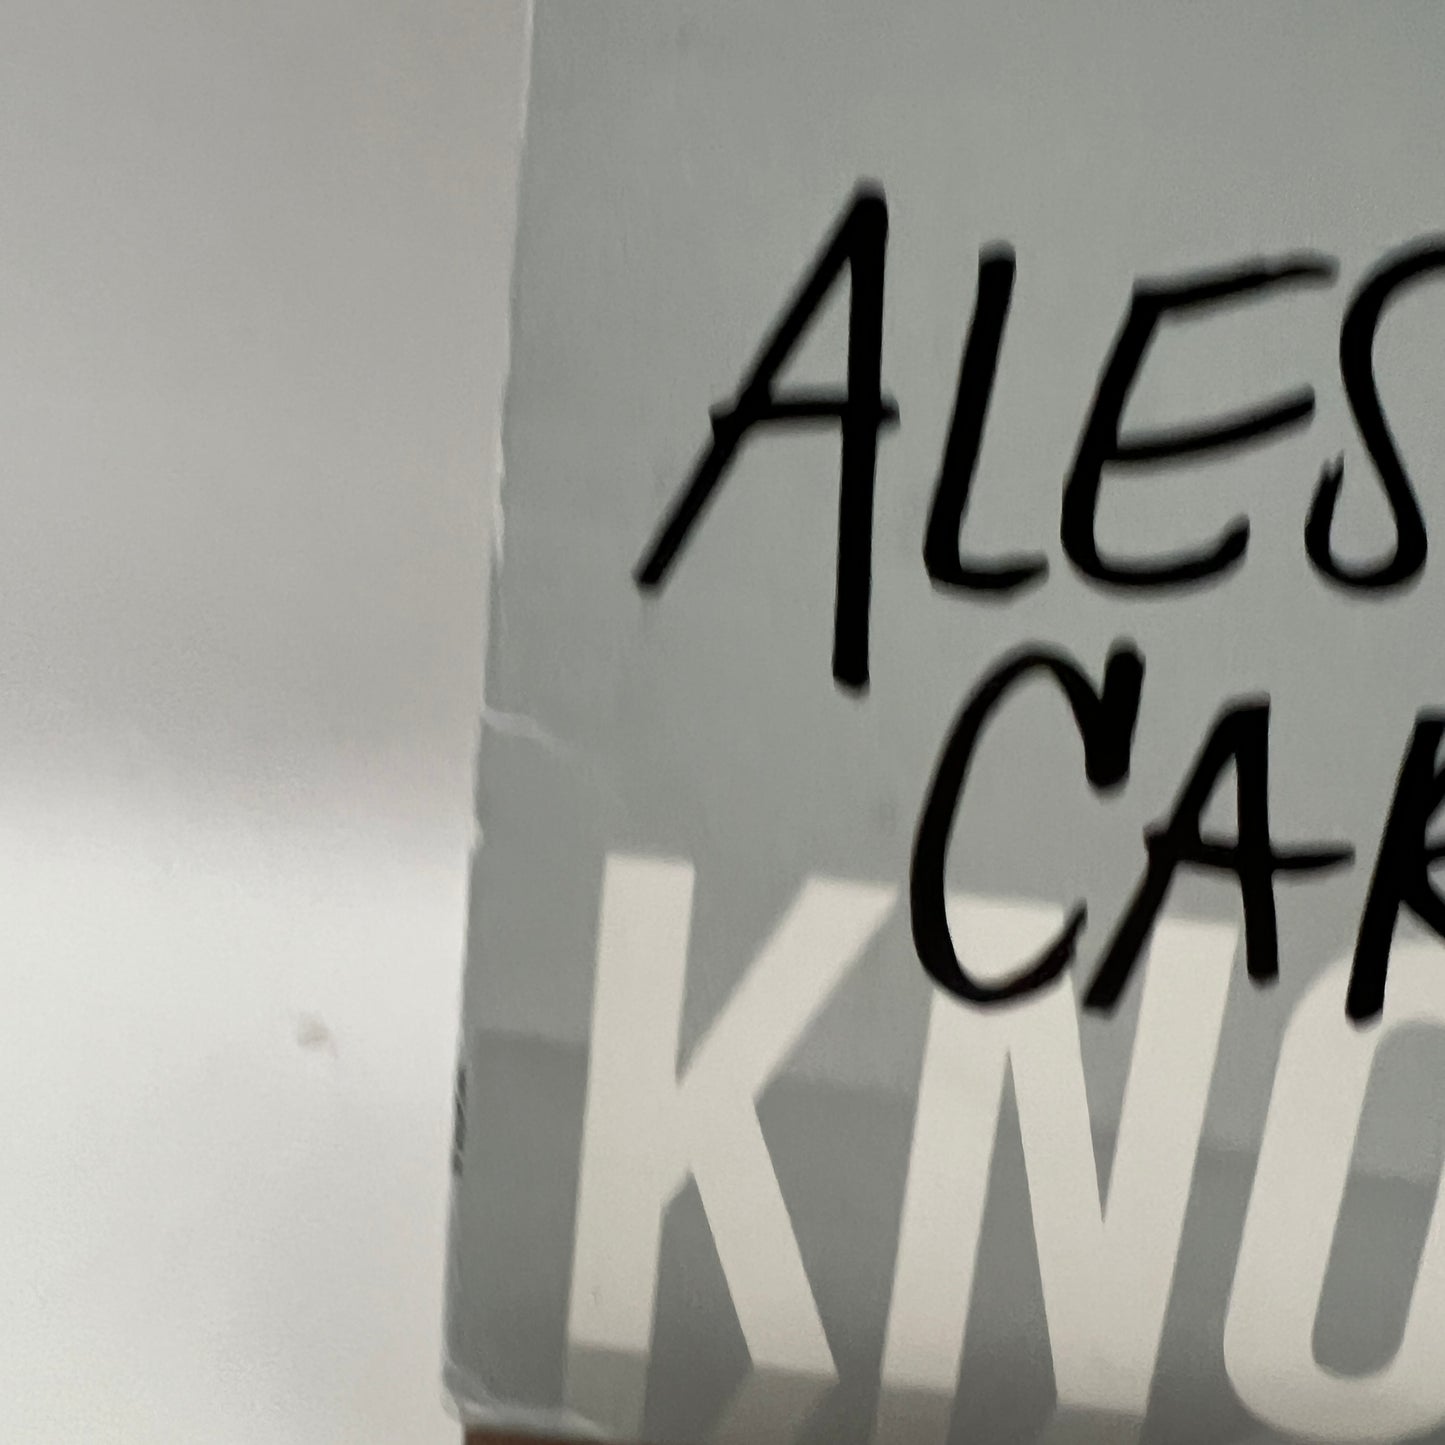 Alessia Cara - Know It All Vinyl LP Pink Def Jam